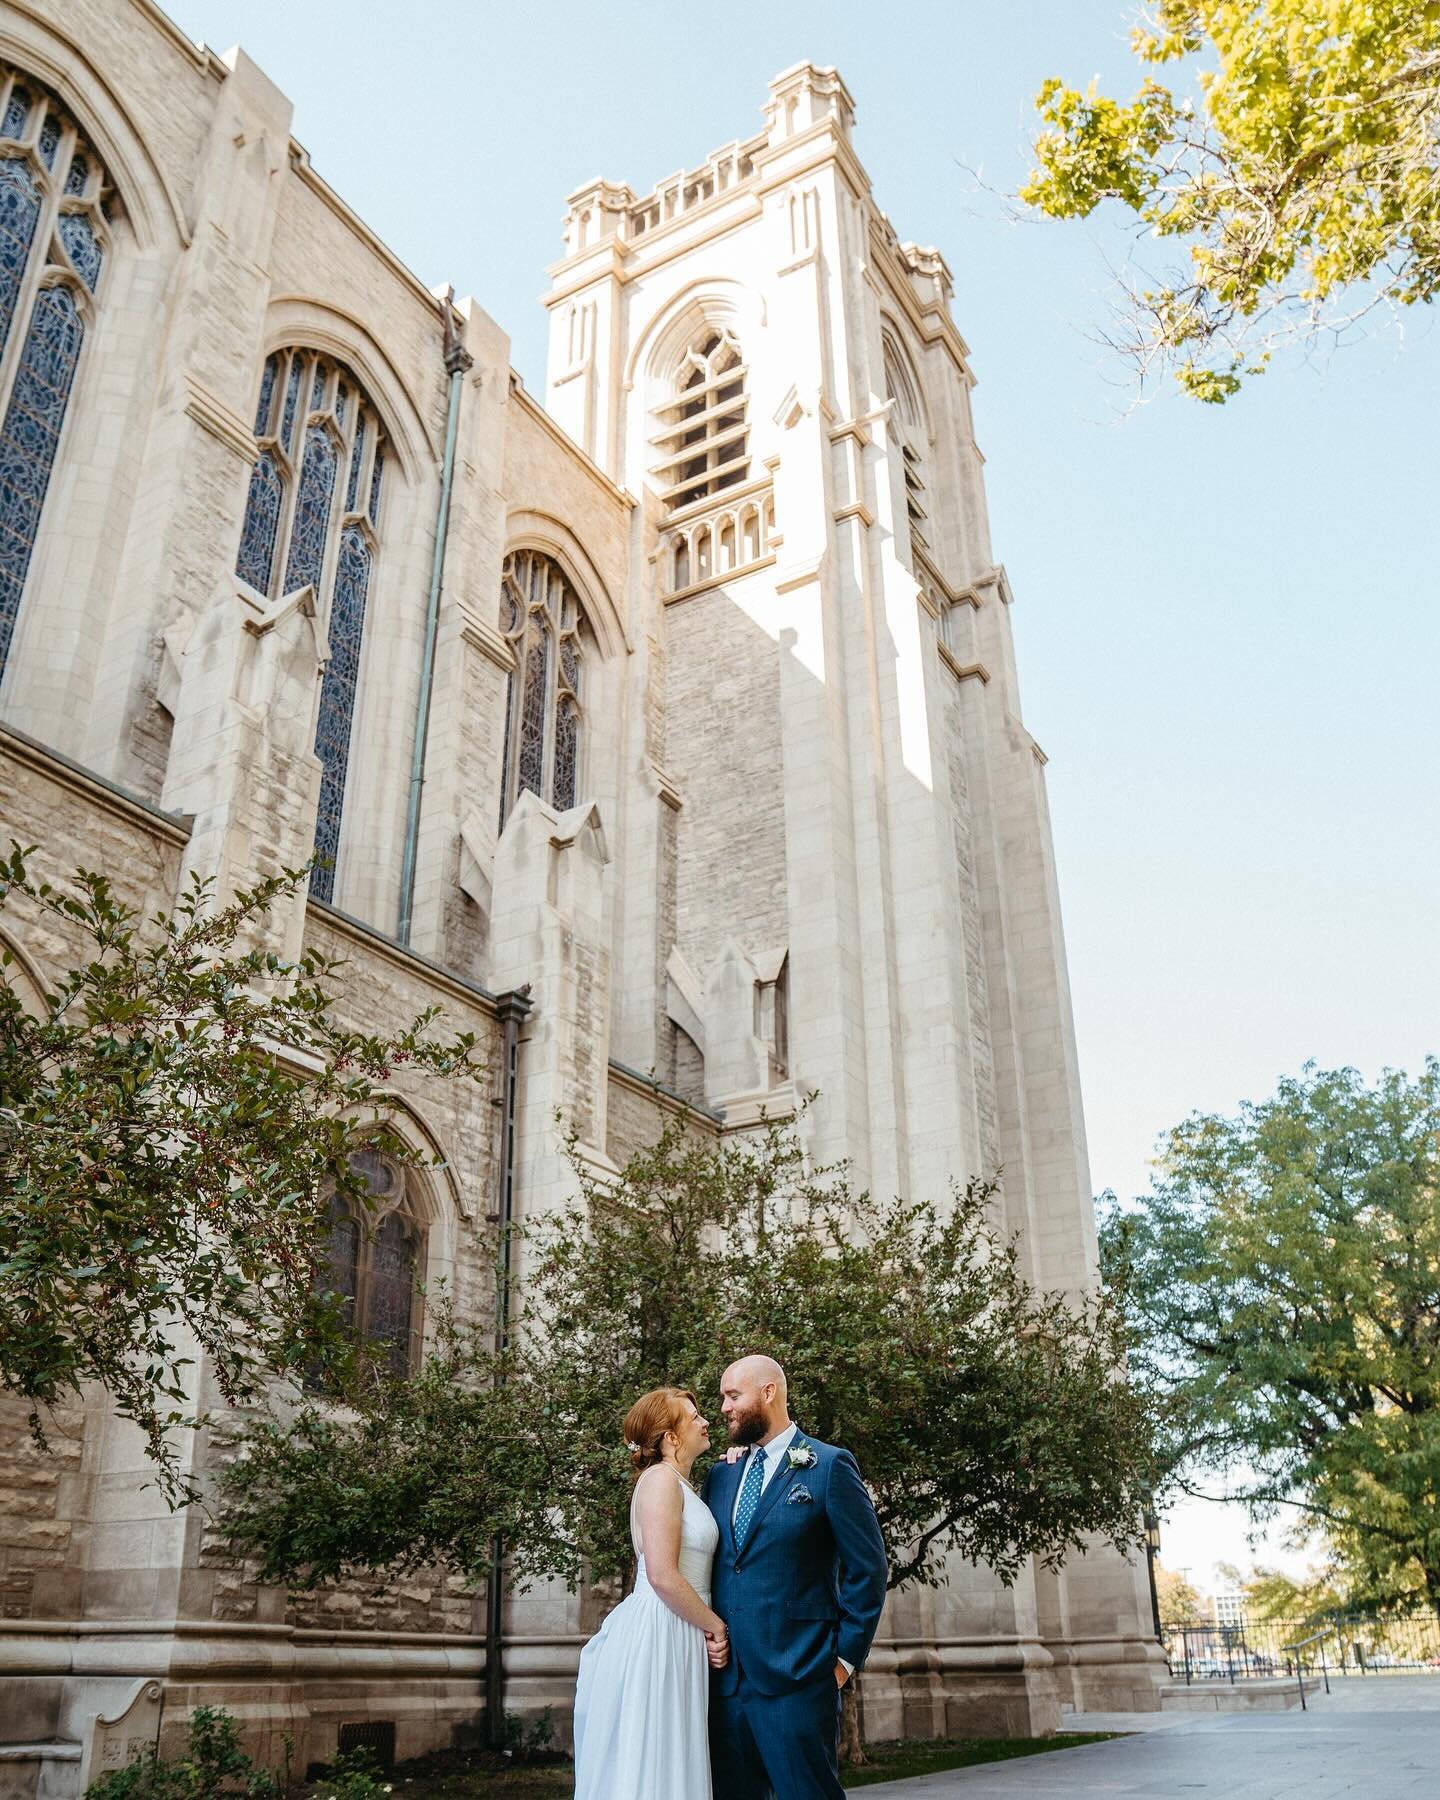 Nicole + Peter Wedding 🕊️✨
.
.
📸: Nate + Kristen
.
.
#denverweddingphotographer #denverweddingphotography #denverartmuseumwedding